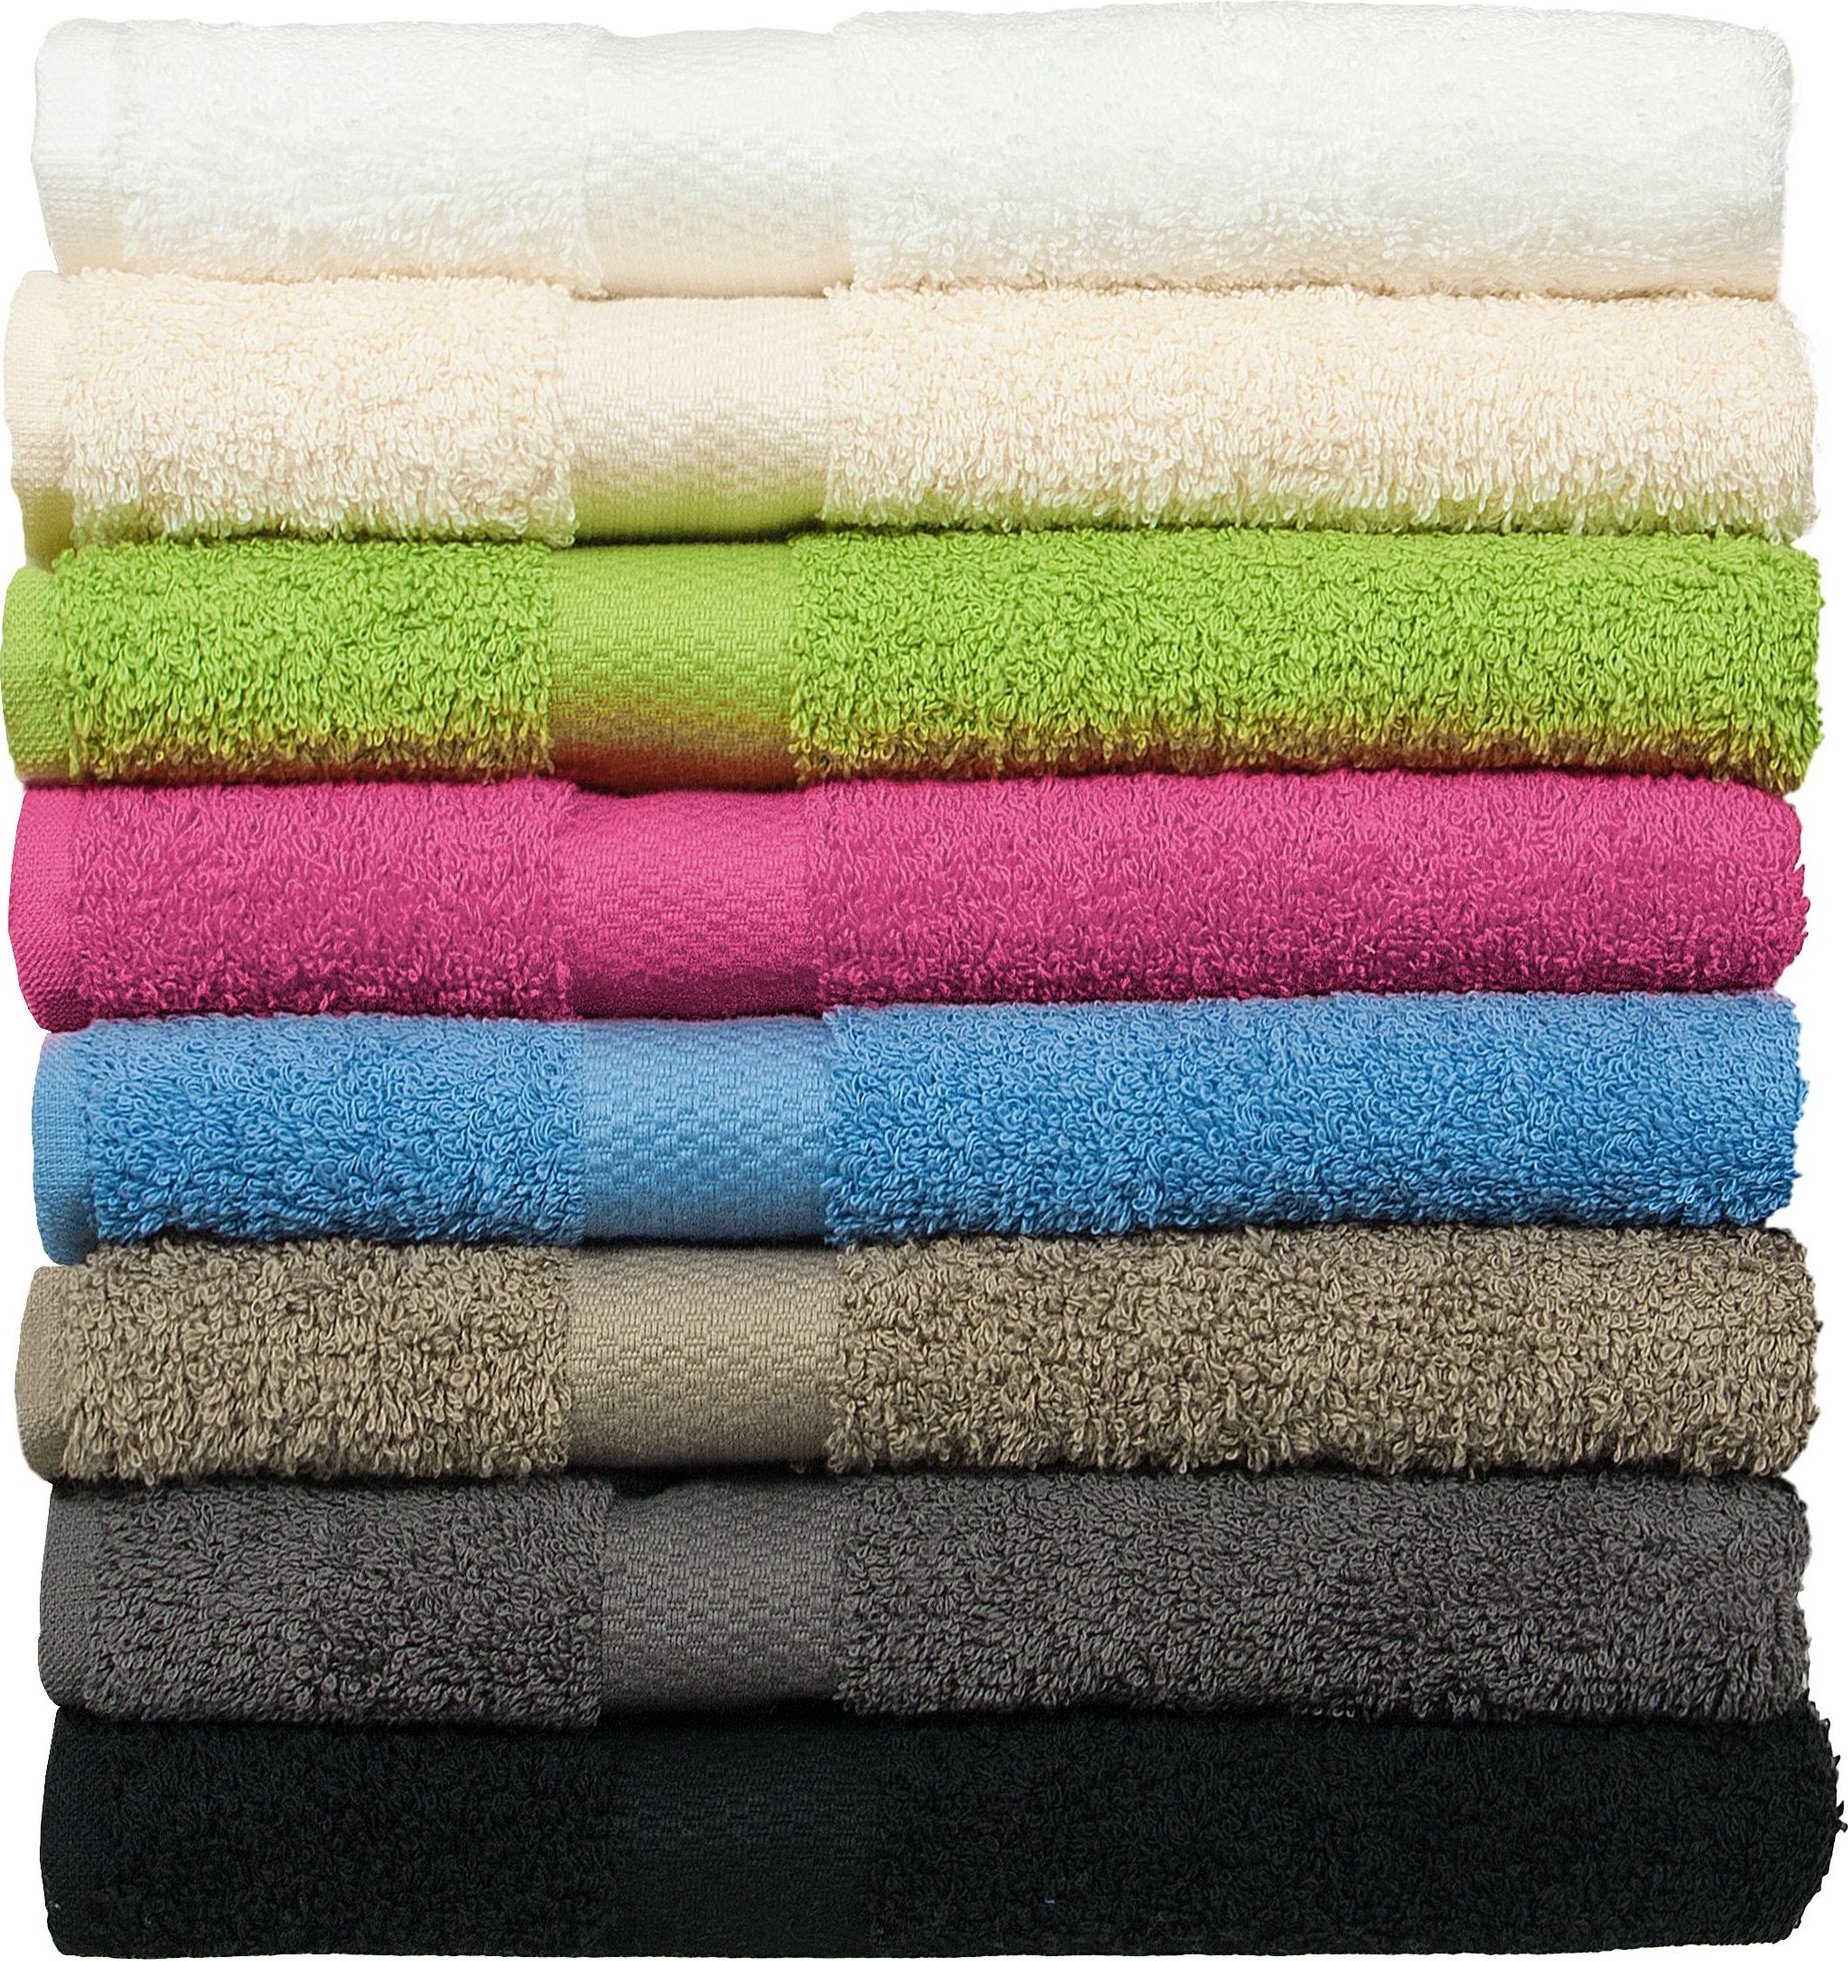 Massage handdoek Zwart 60 x 110 cm